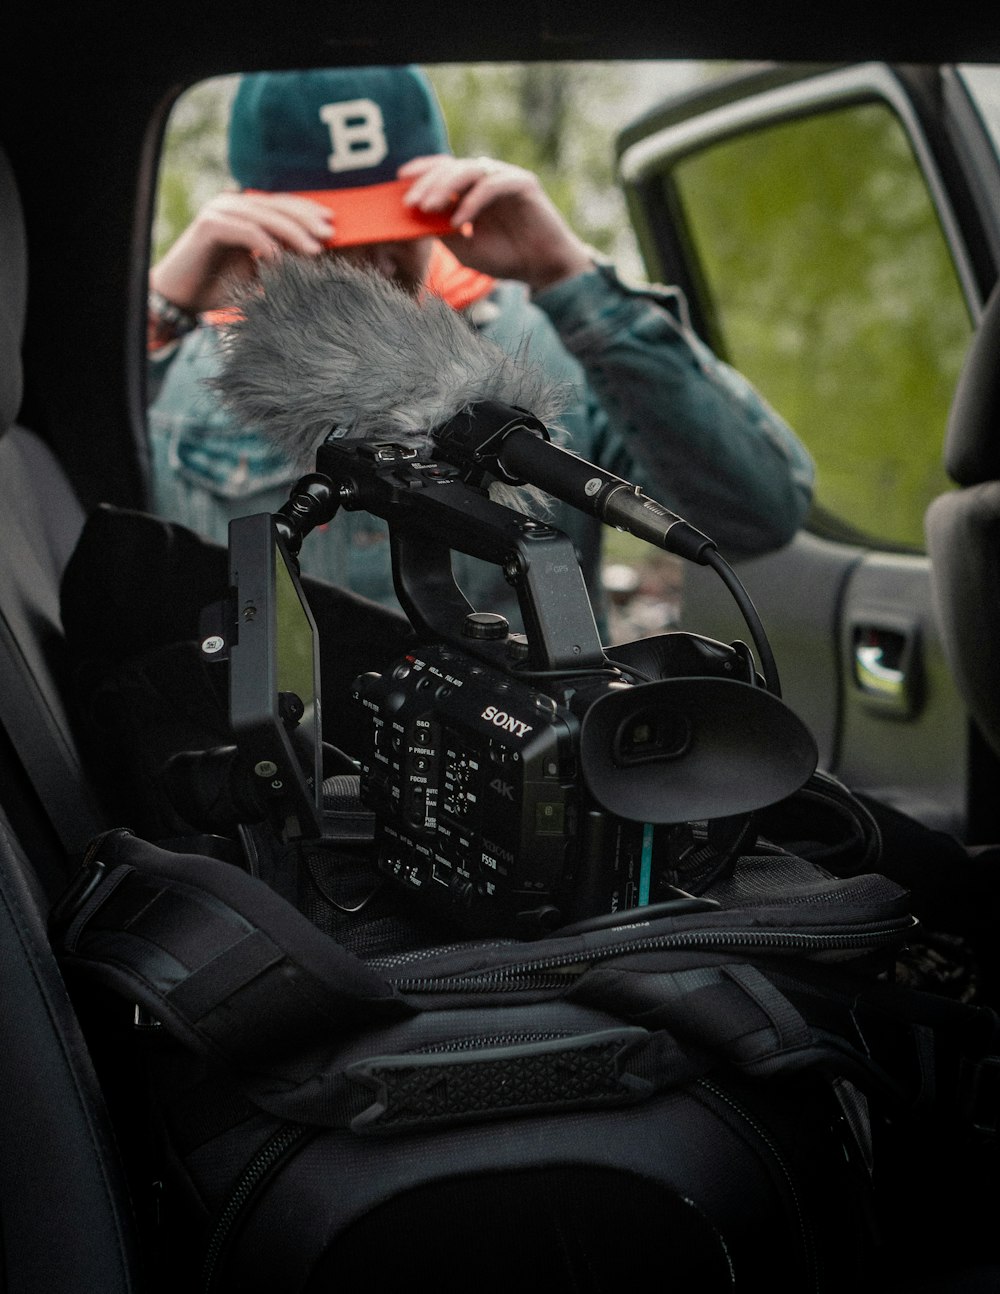 black video camera inside the vehicle